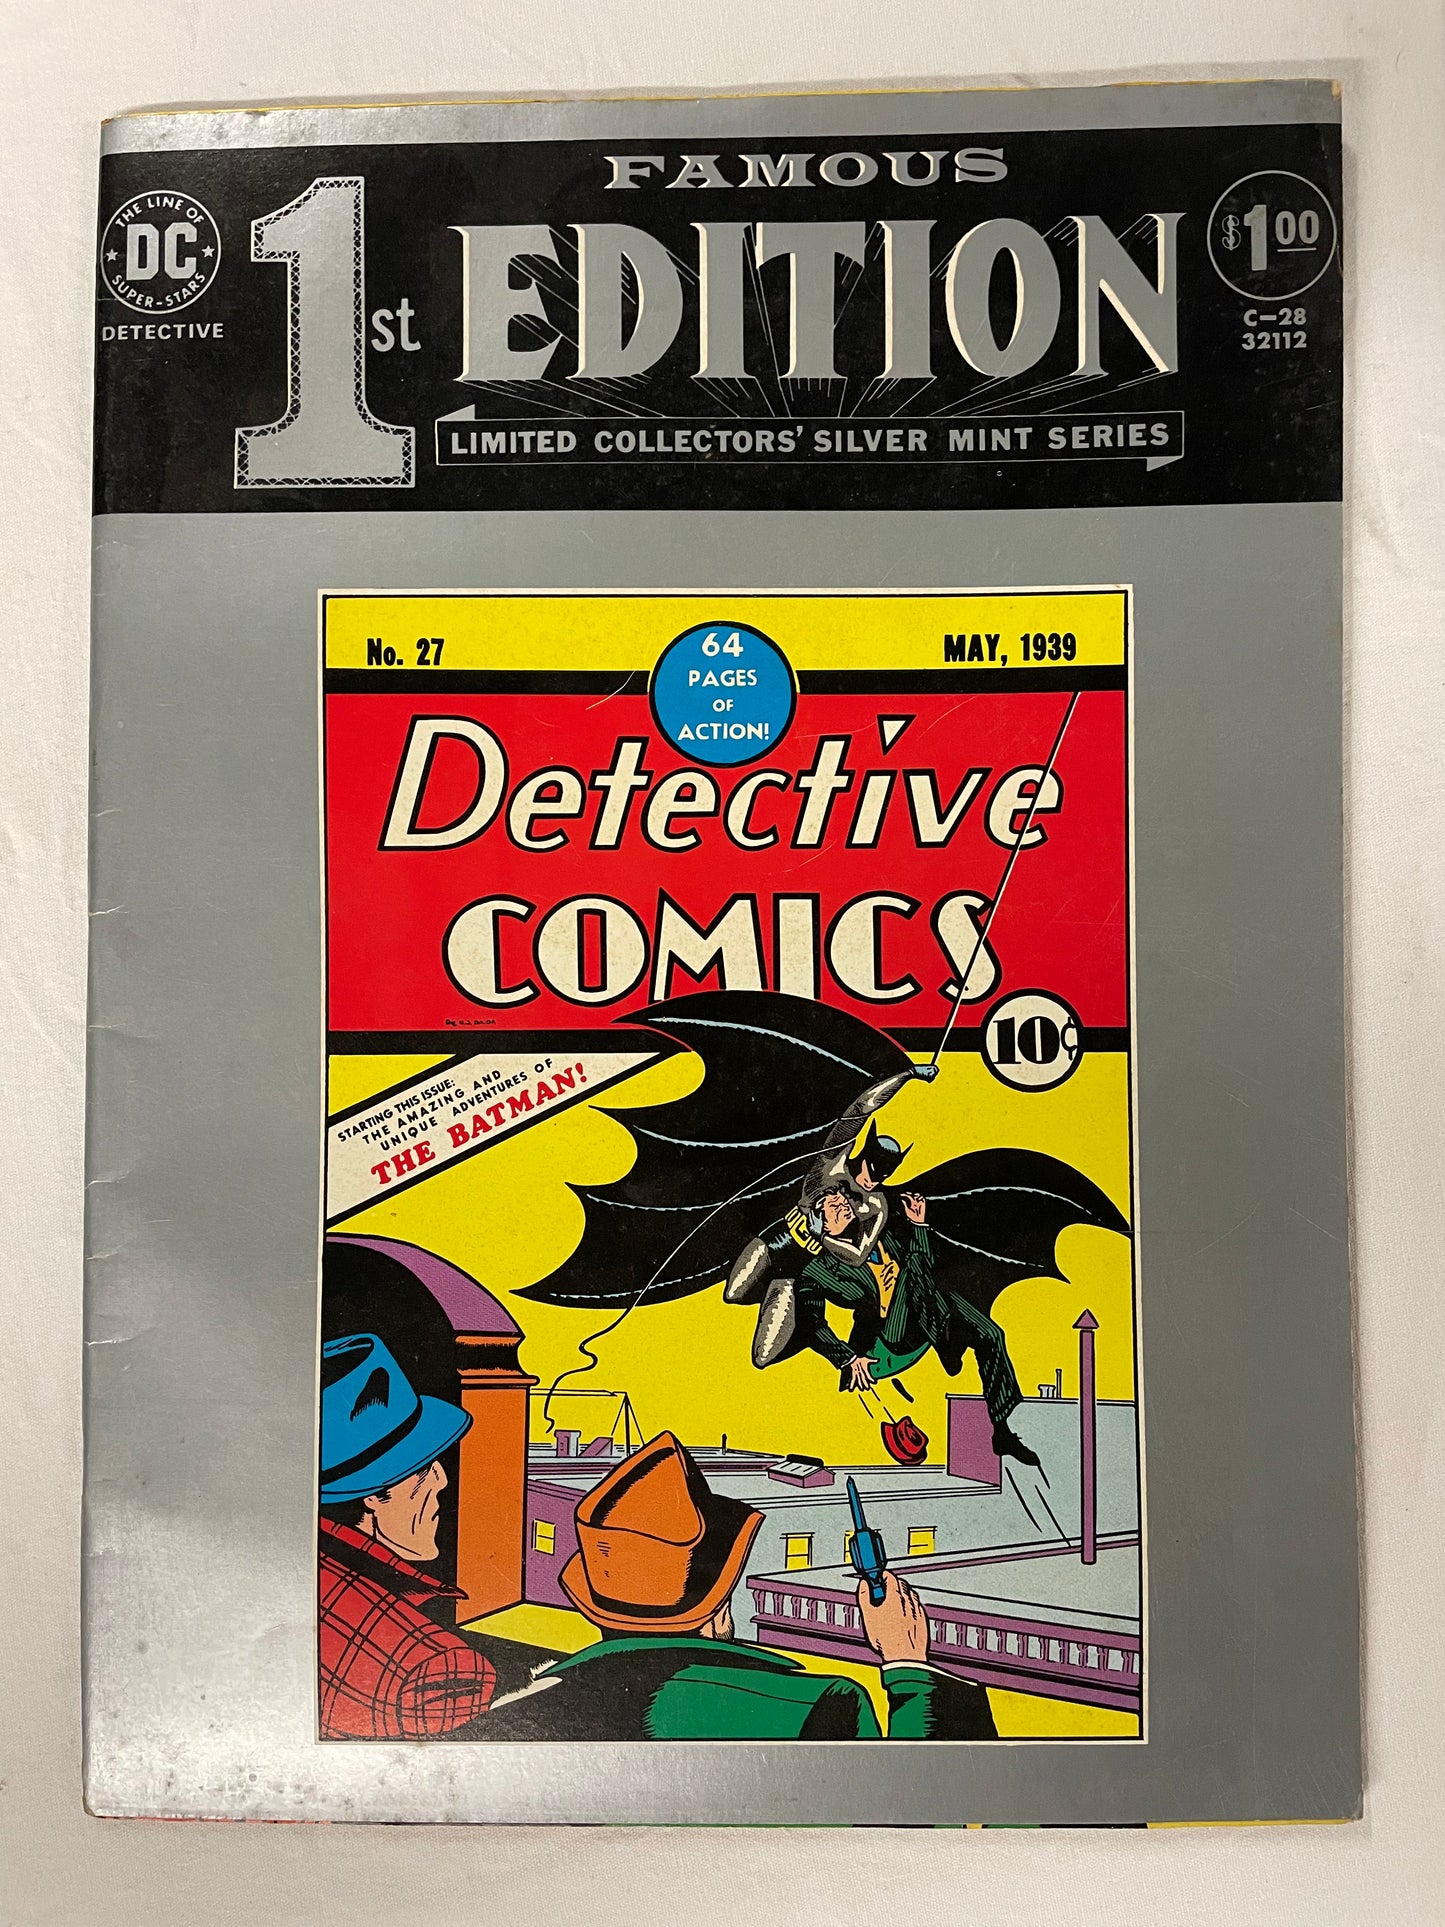 Batman Collection 1966 & 1974 Oversized Comics and Wall Pin Ups